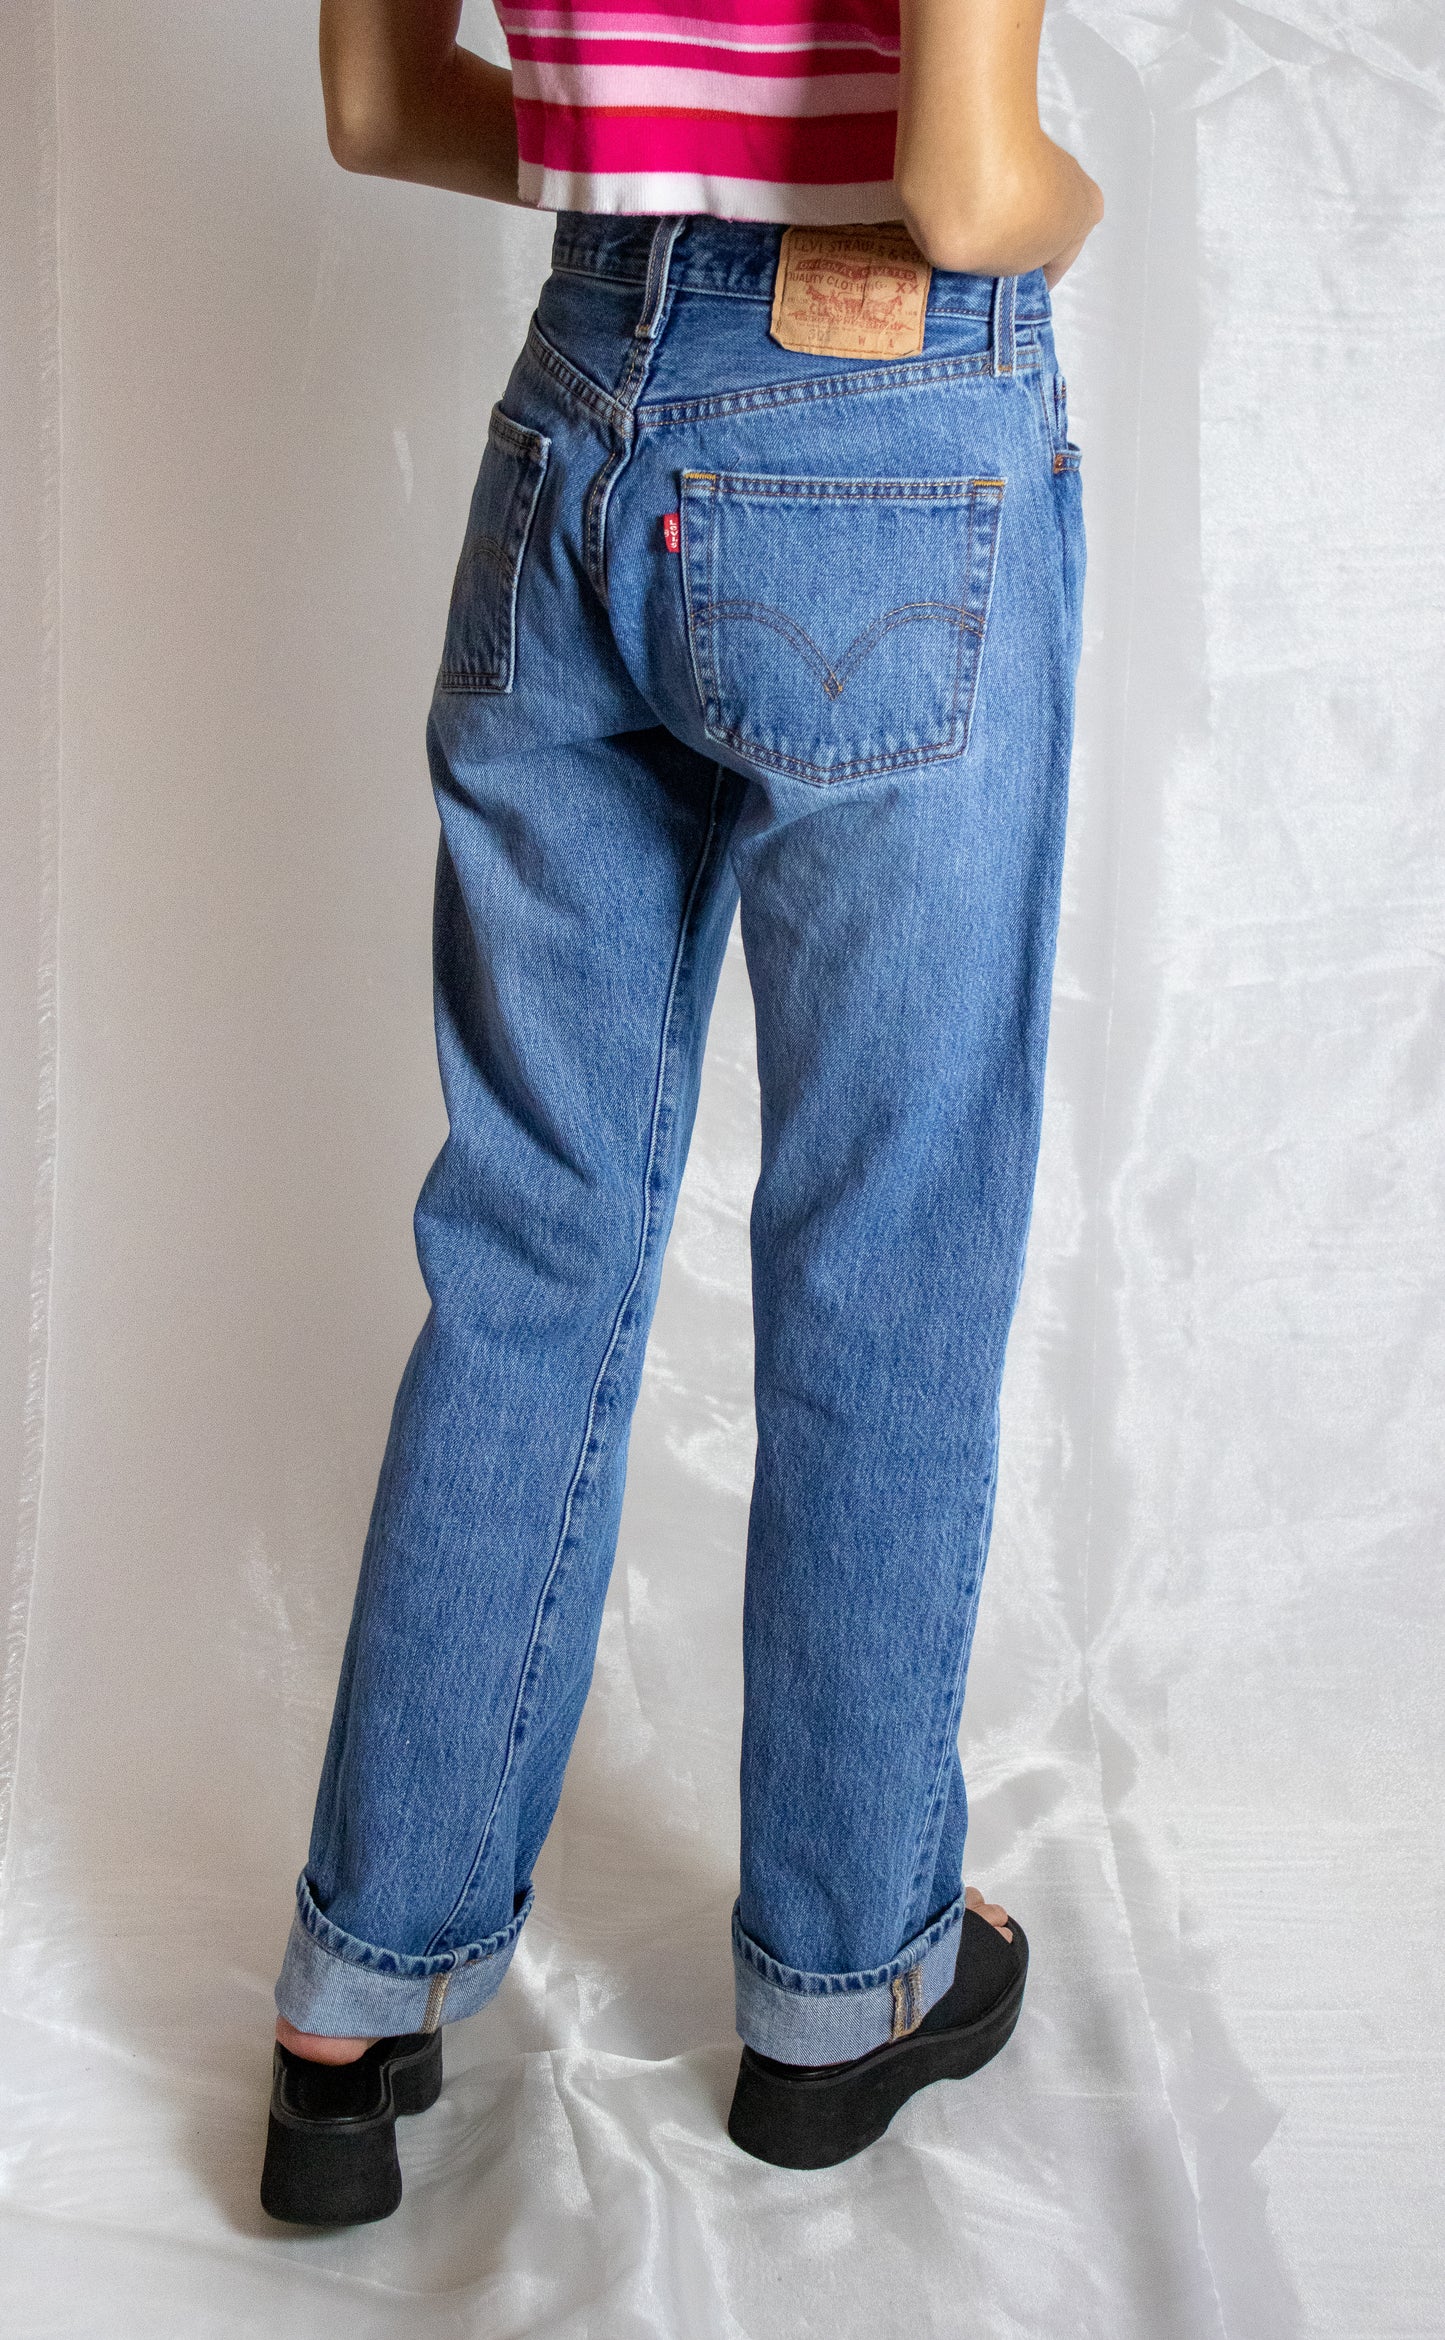 501 Levi's Medium Wash Jeans - 26x34